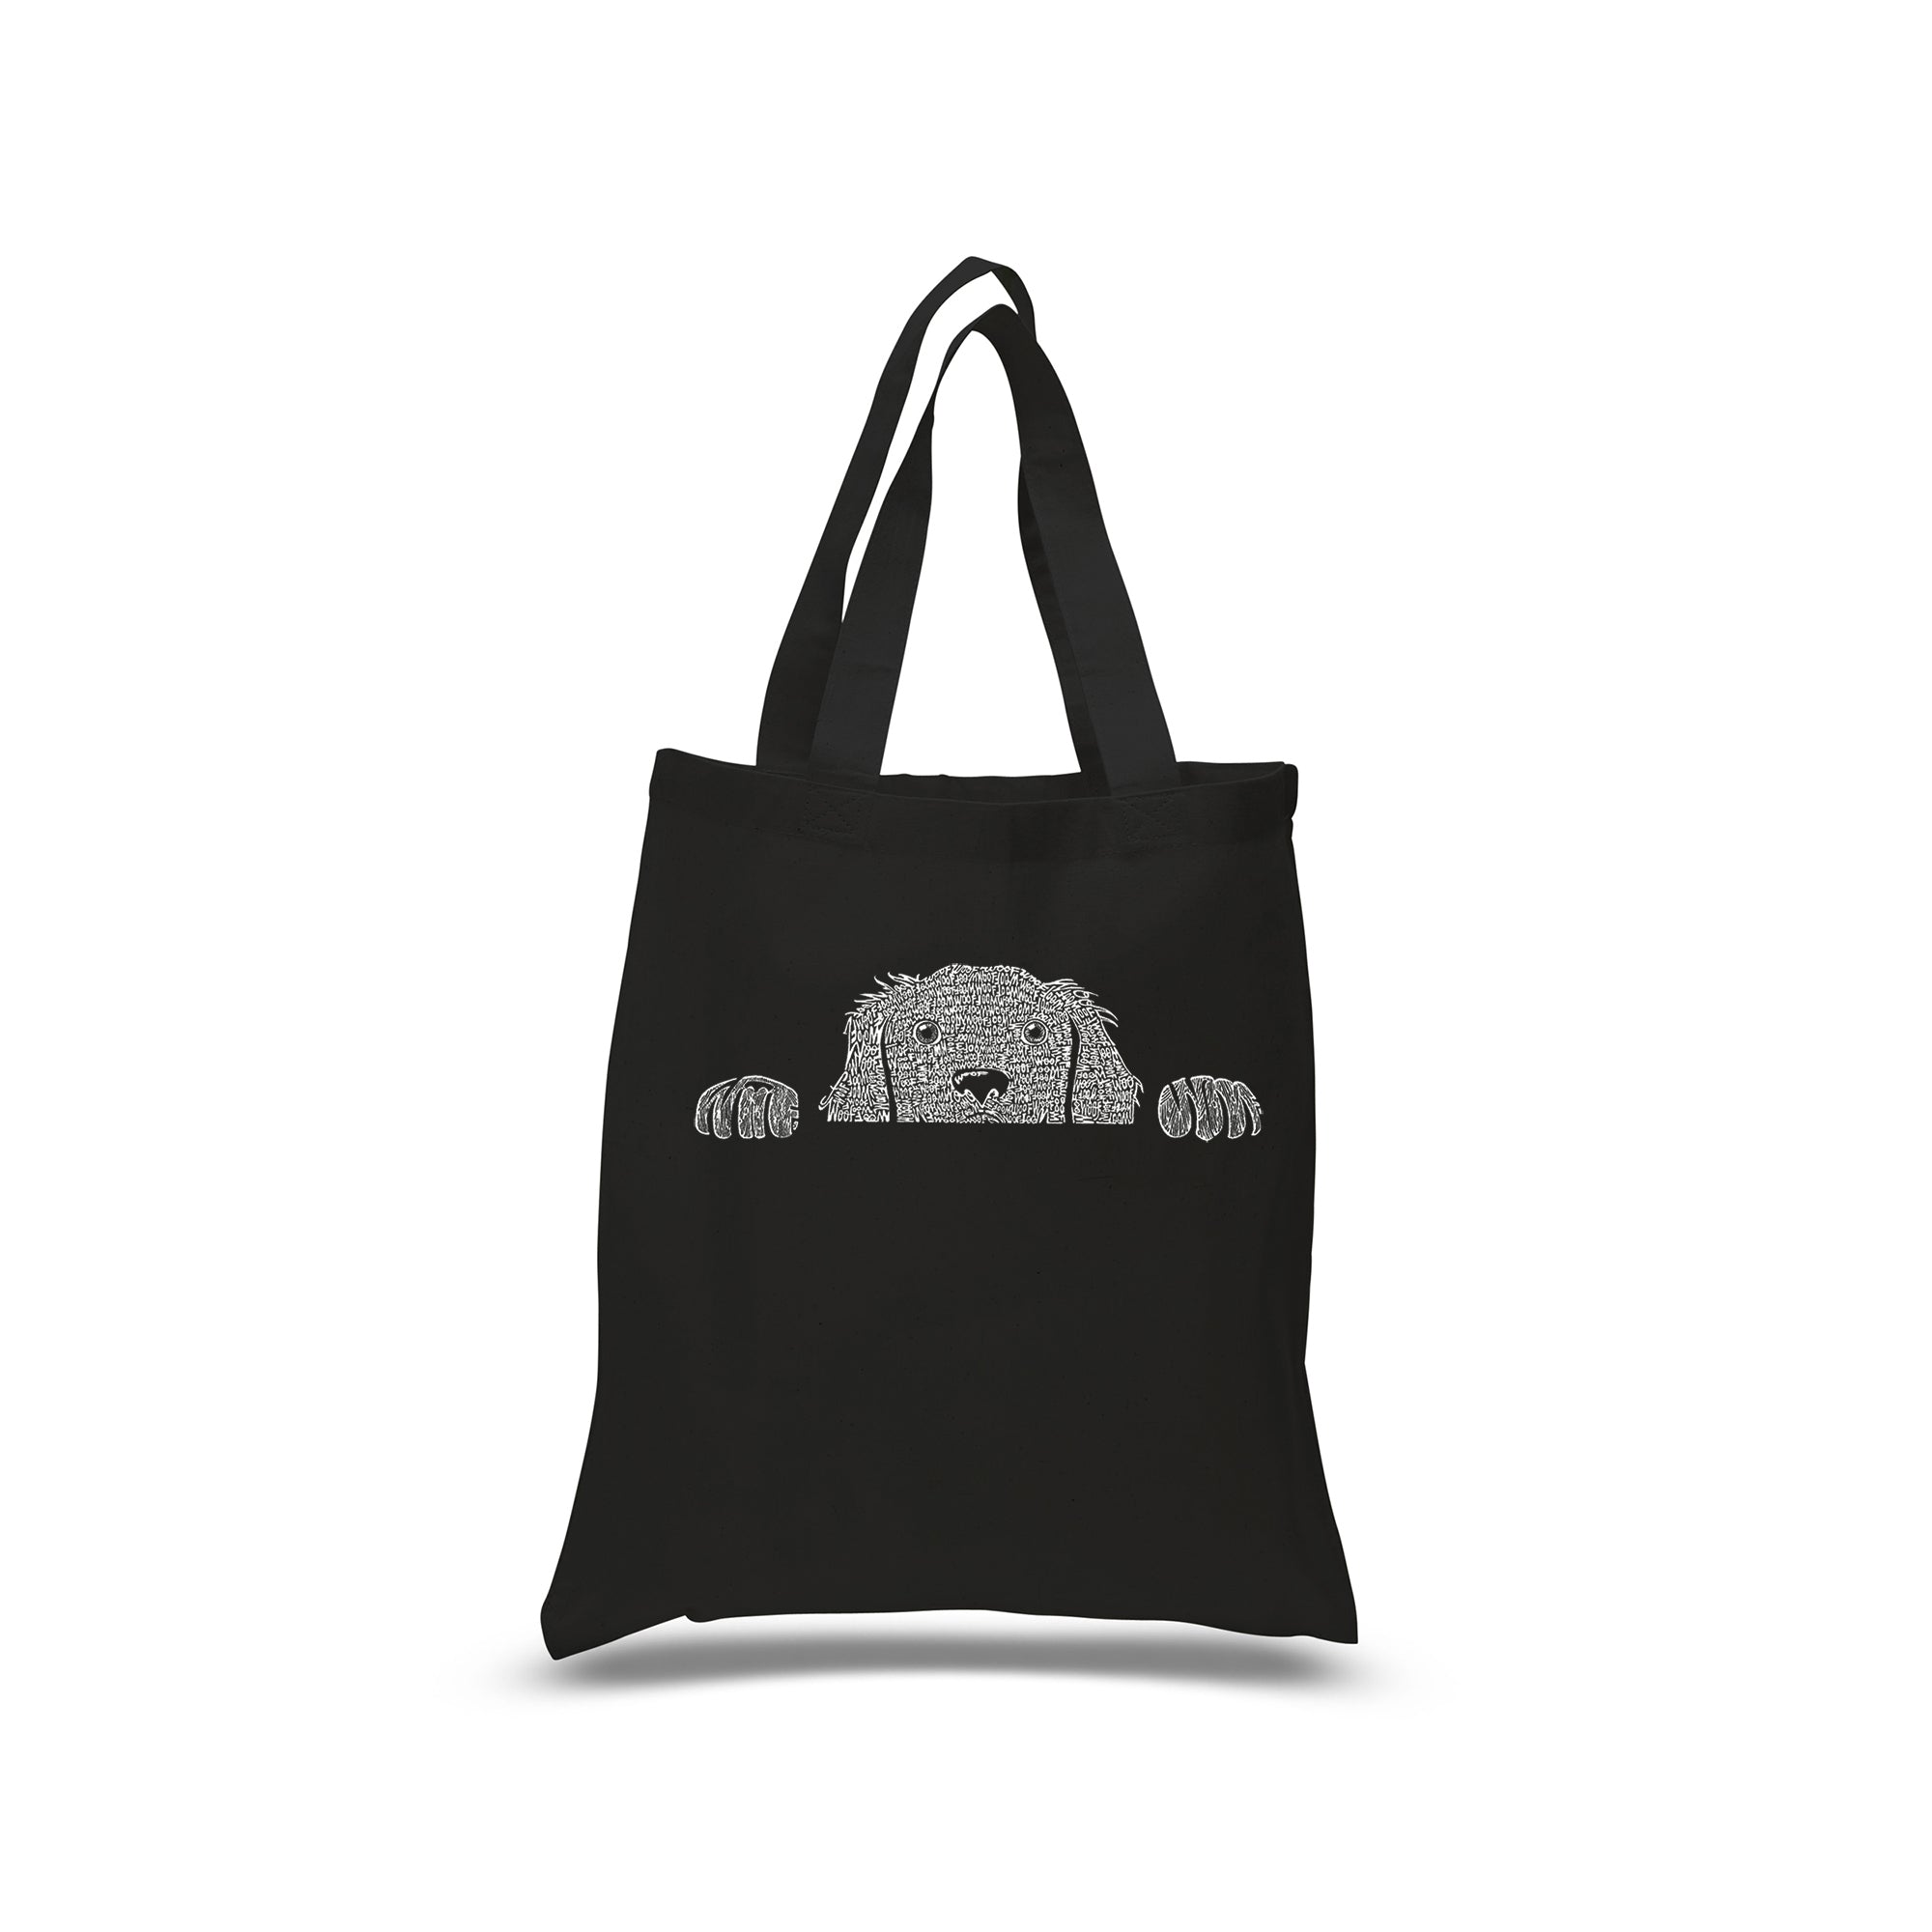 Peeking Dog - Small Word Art Tote Bag - SMALL - Black